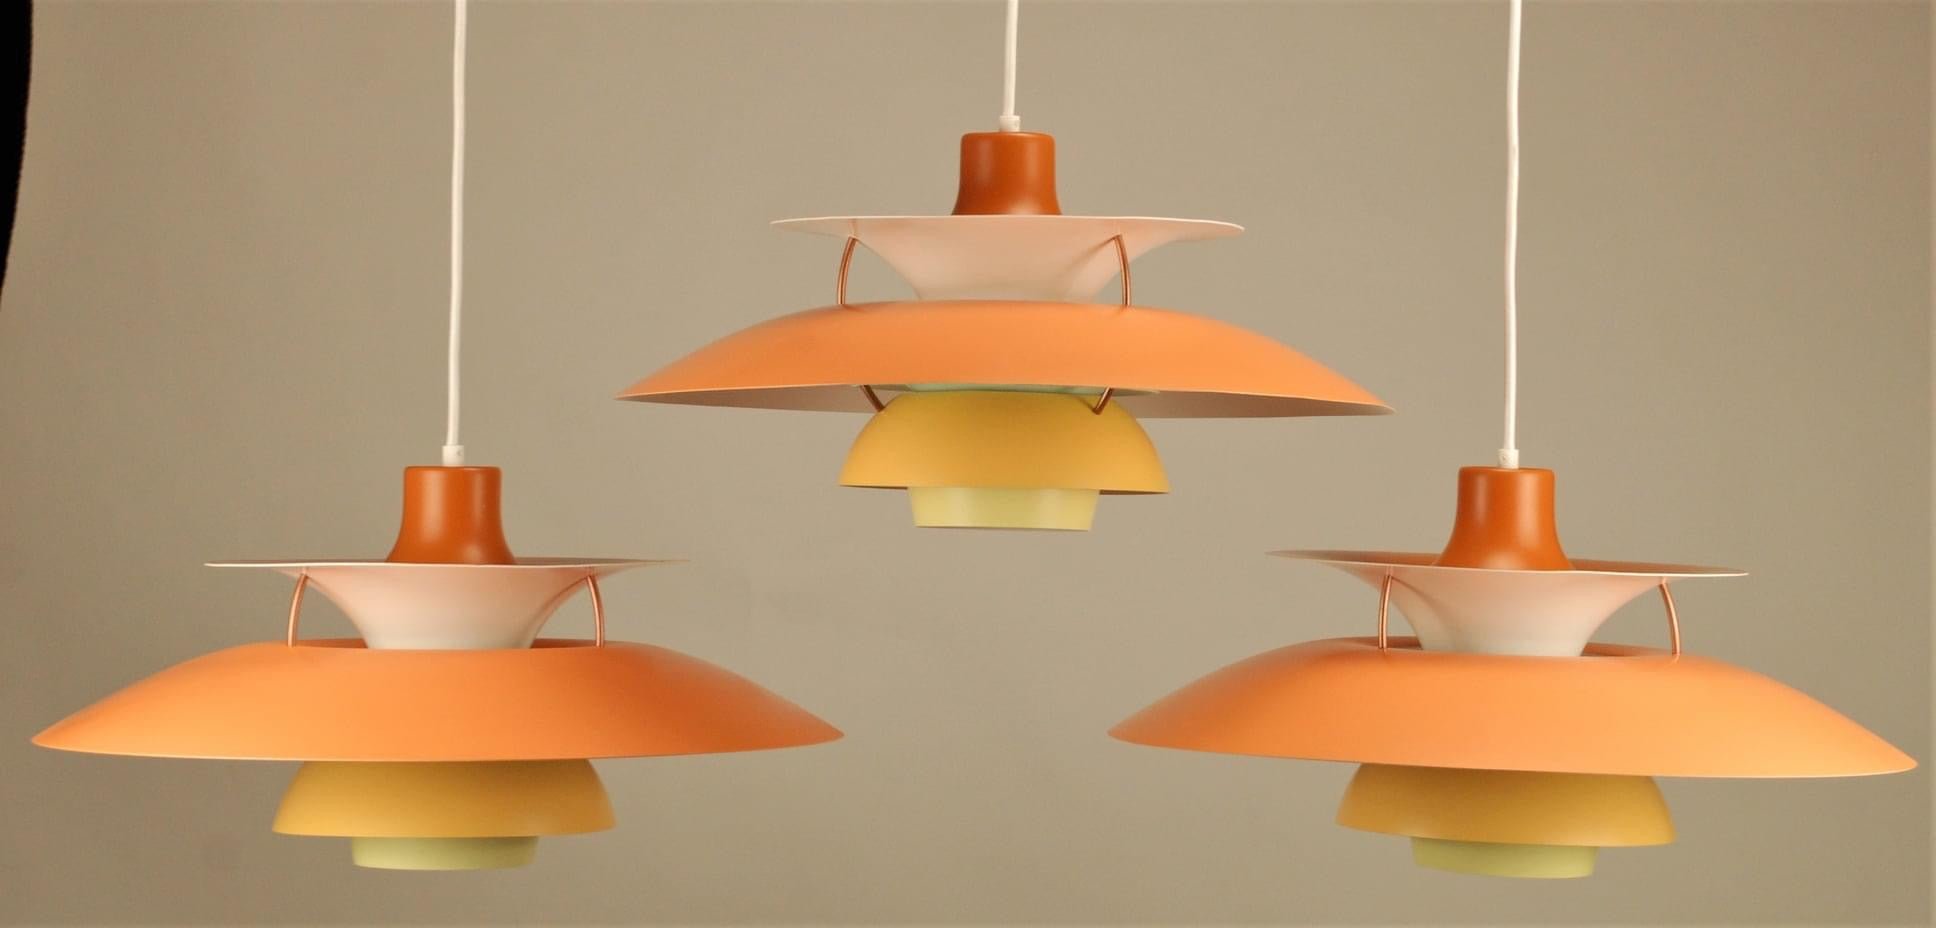 Set of 3 Vintage Louis Poulsen PH5 Pendant Lights | Vintage 1970's | Mid century modern design by Poul Henningsen - FancyVintage.nl -